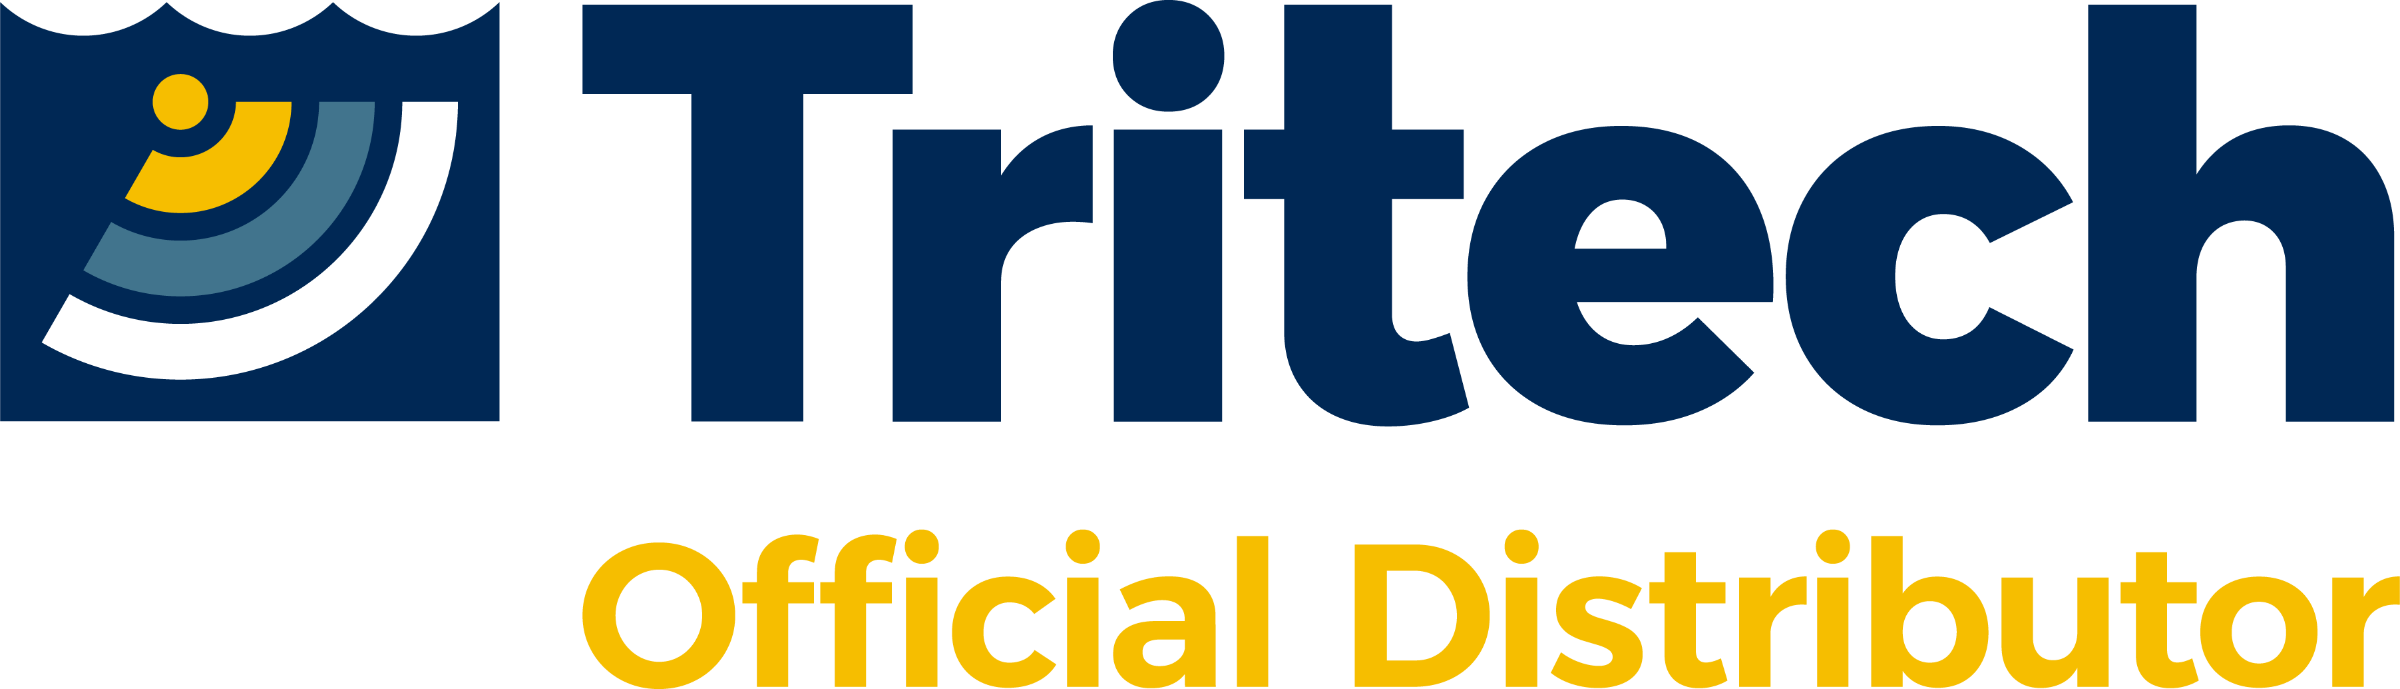 Tritech distributor